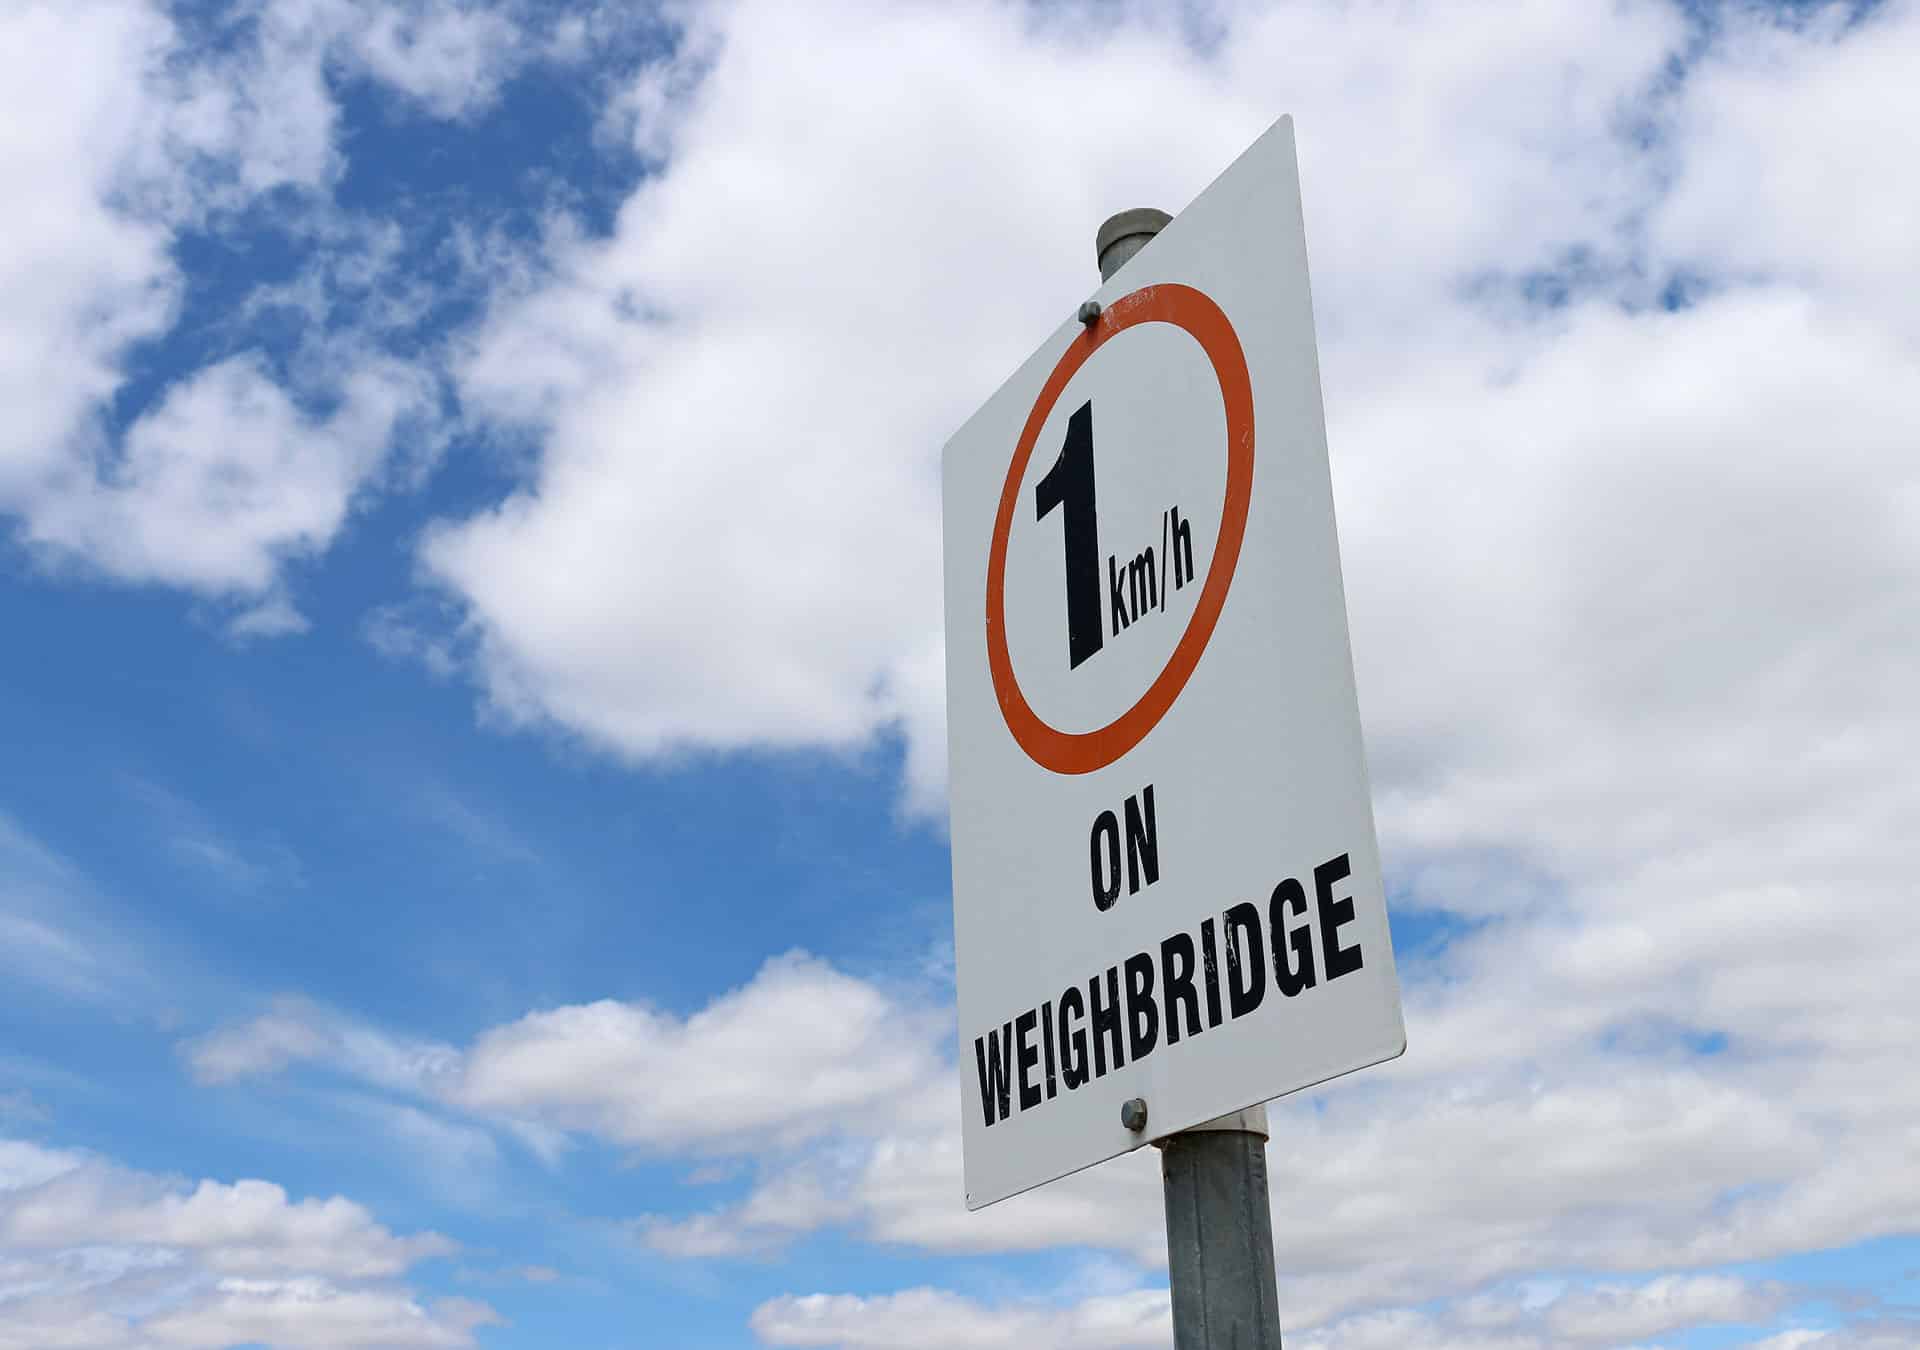 Weighbridge sign